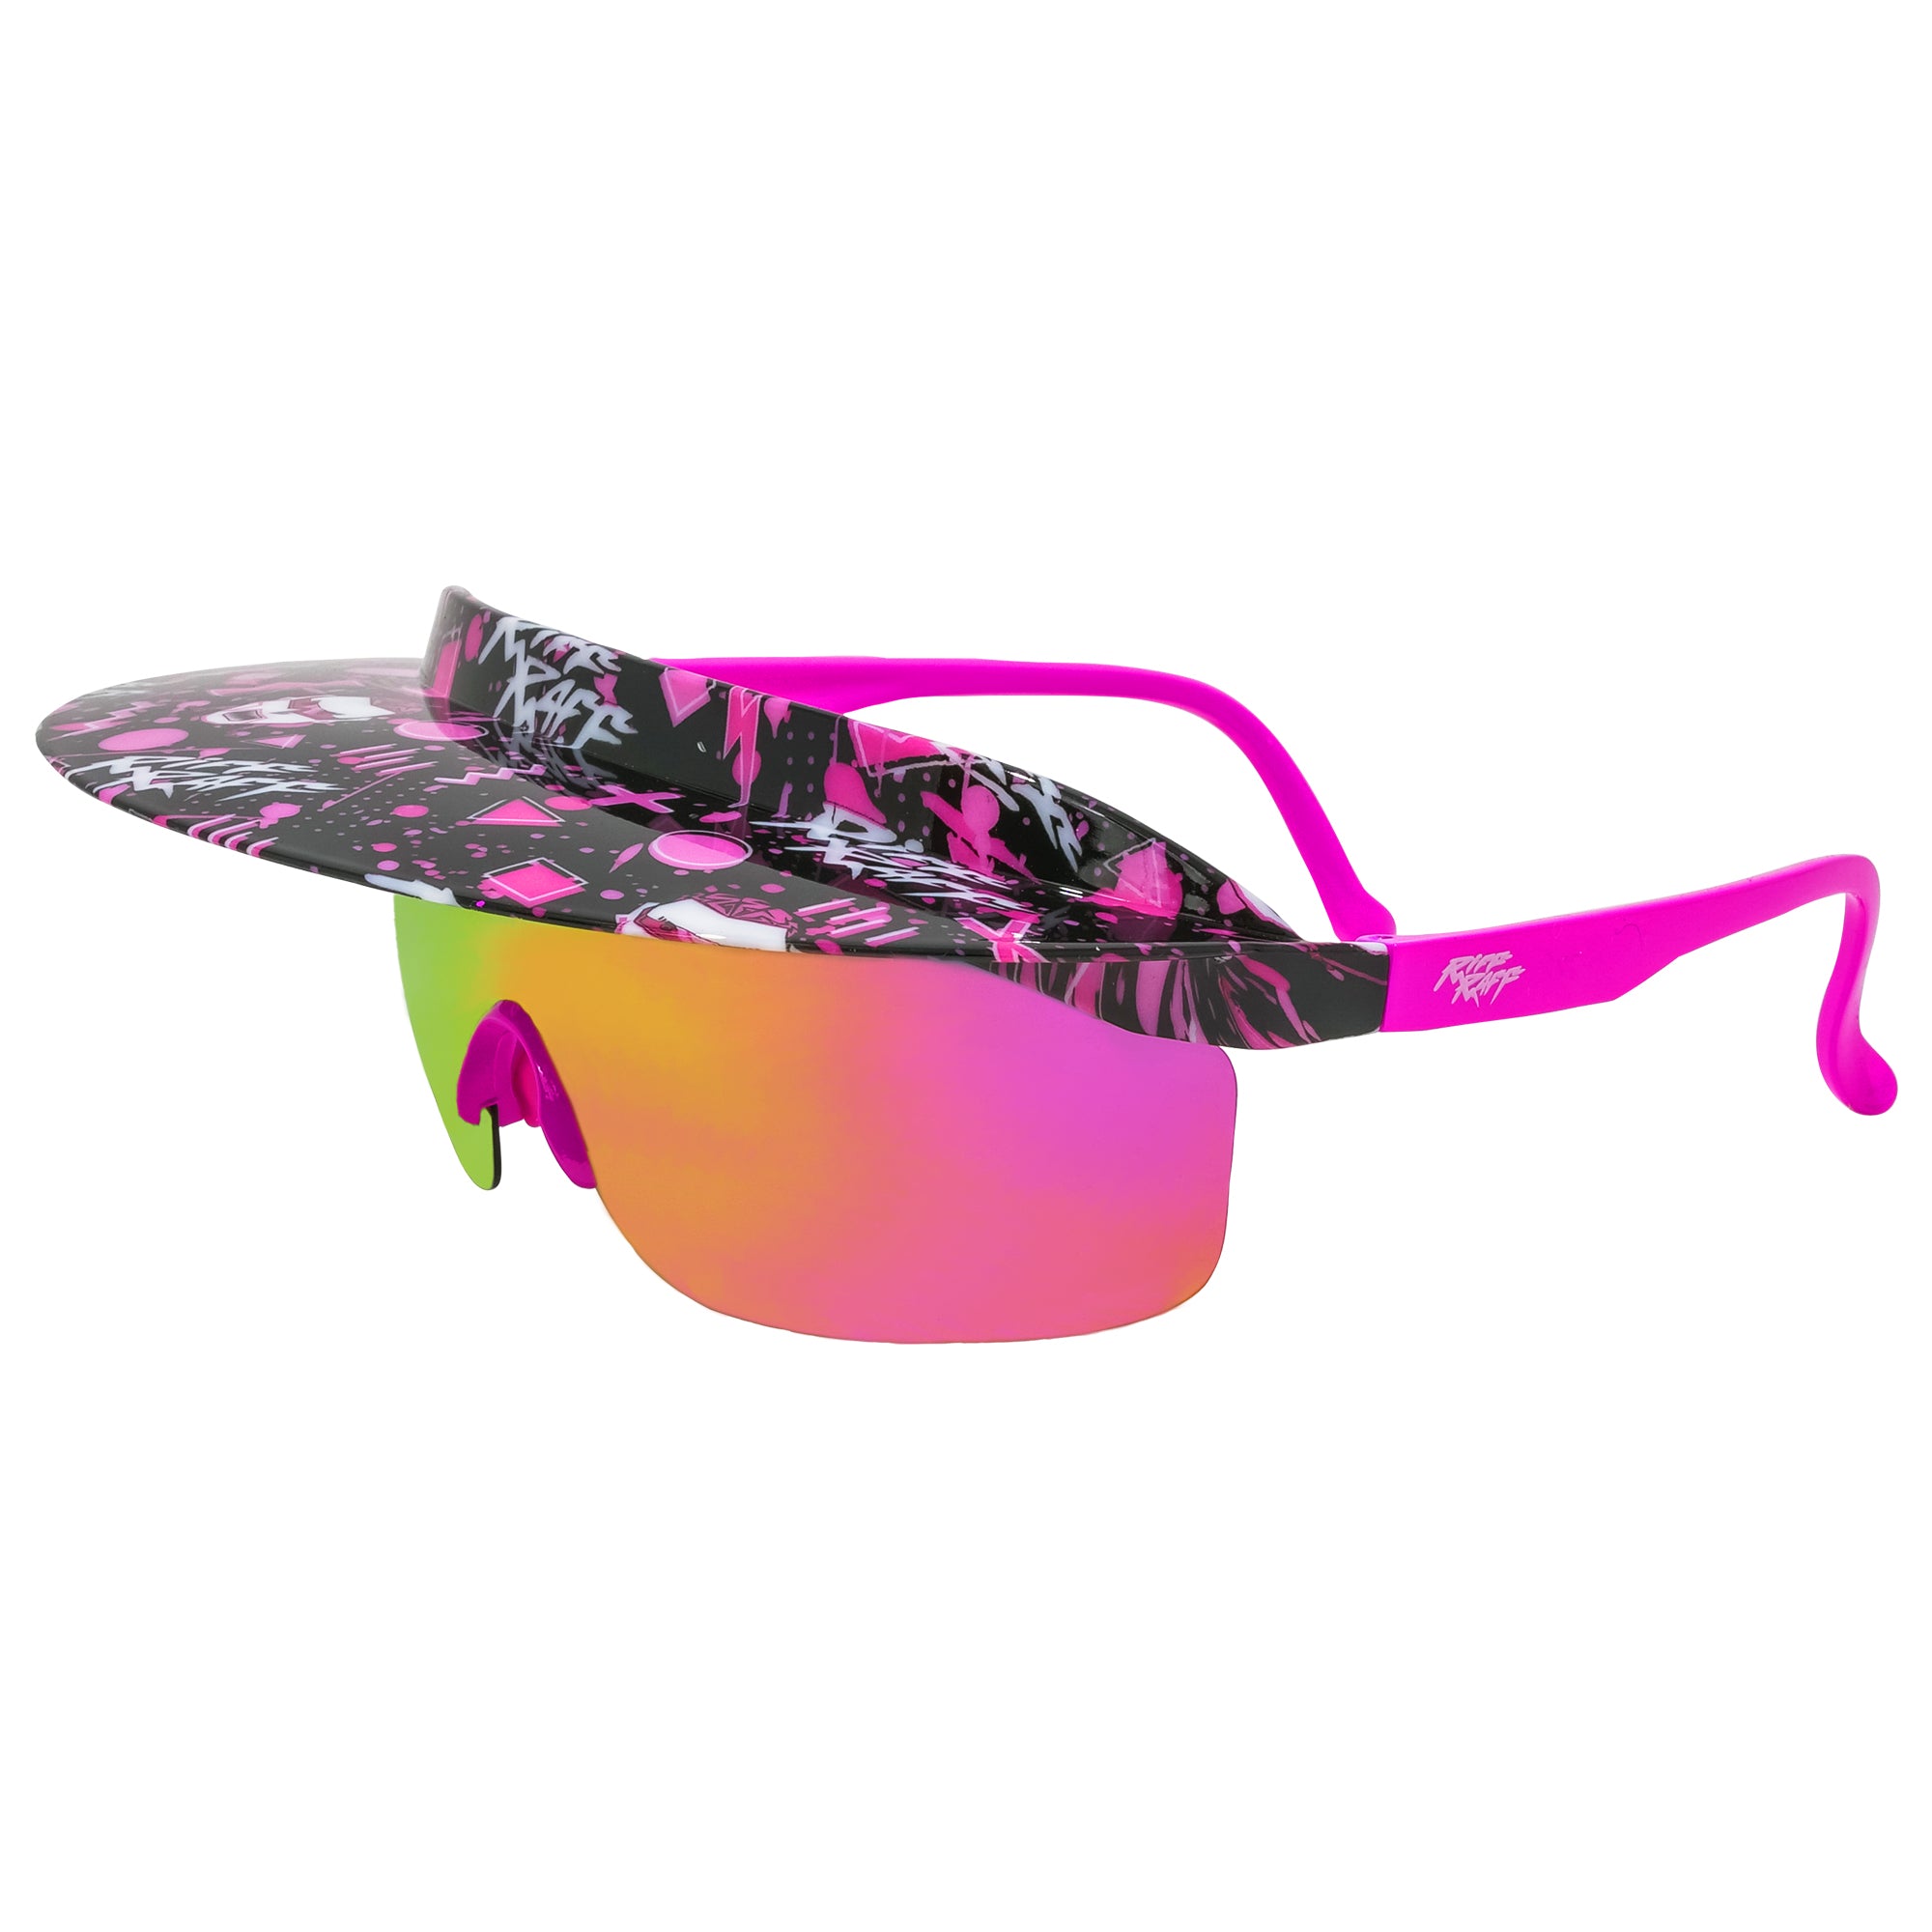 The Neon Icon 80s riff raff jody highroller inspired dale dan tony retro vintage pink and black custom Visor shade UV400 sunglasses. Fully polarized B Fresh Gear